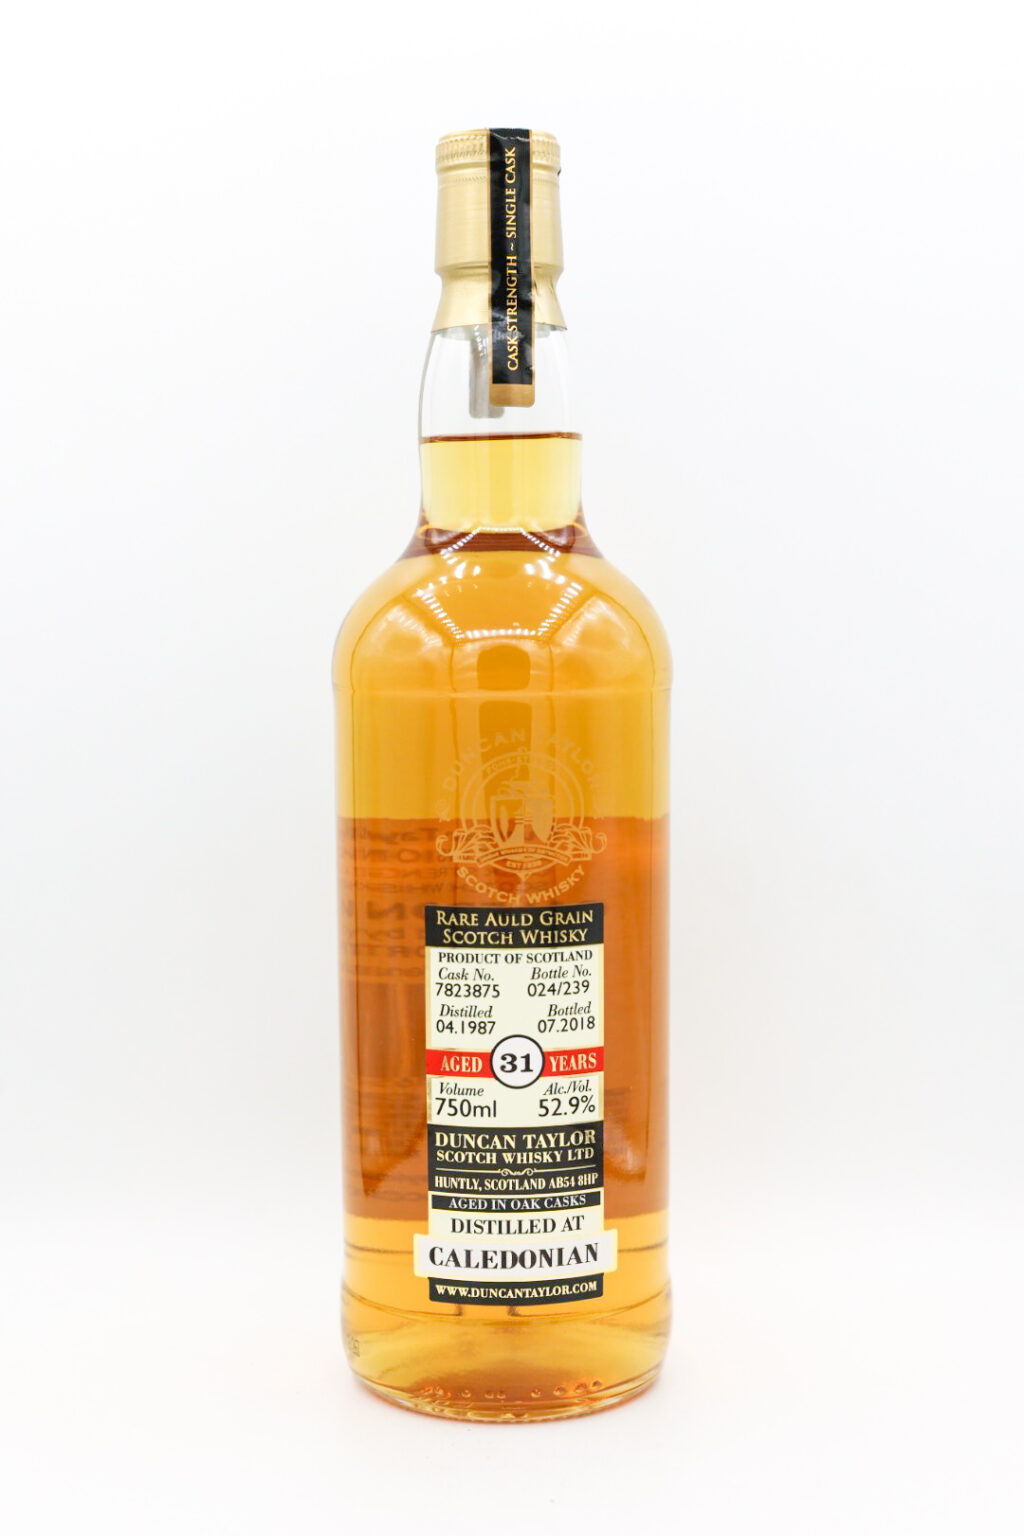 Duncan Taylor Rare Auld Grain Caledonian 31 Year Old Single Grain Scotch Whisky